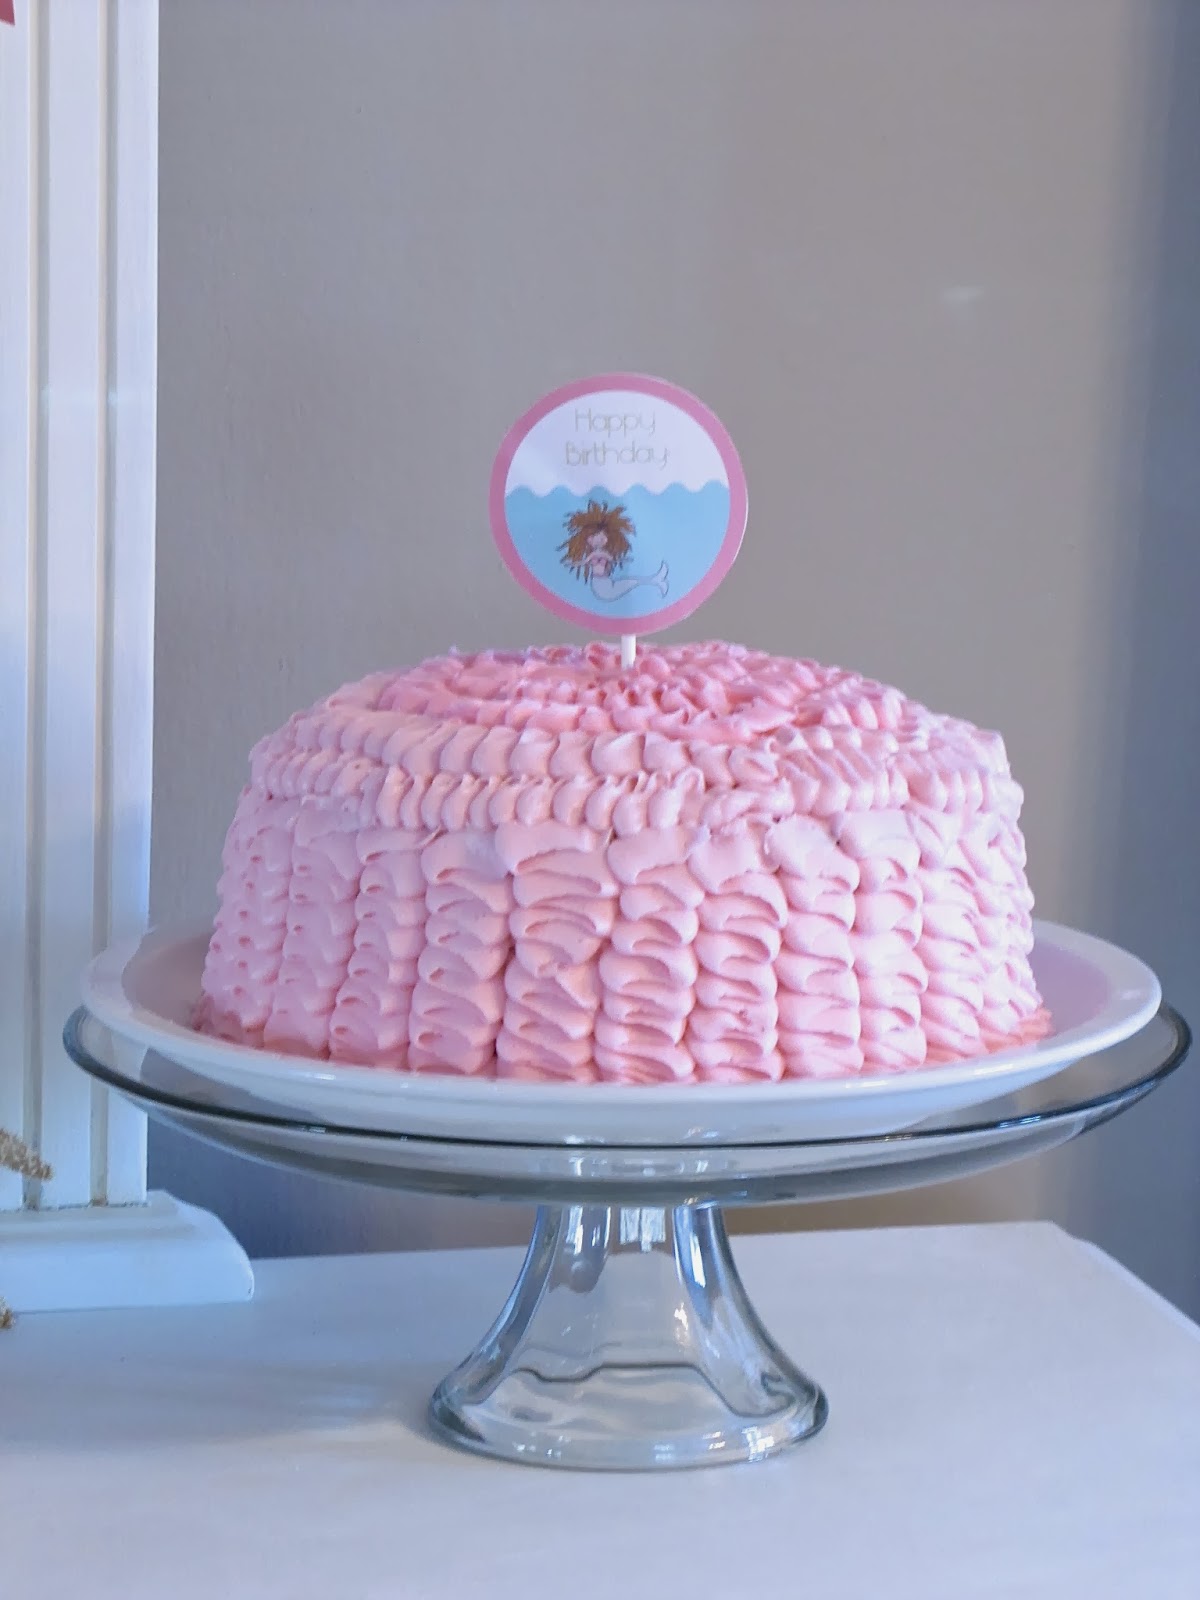 pink ruffle cake for mermaid birthday party